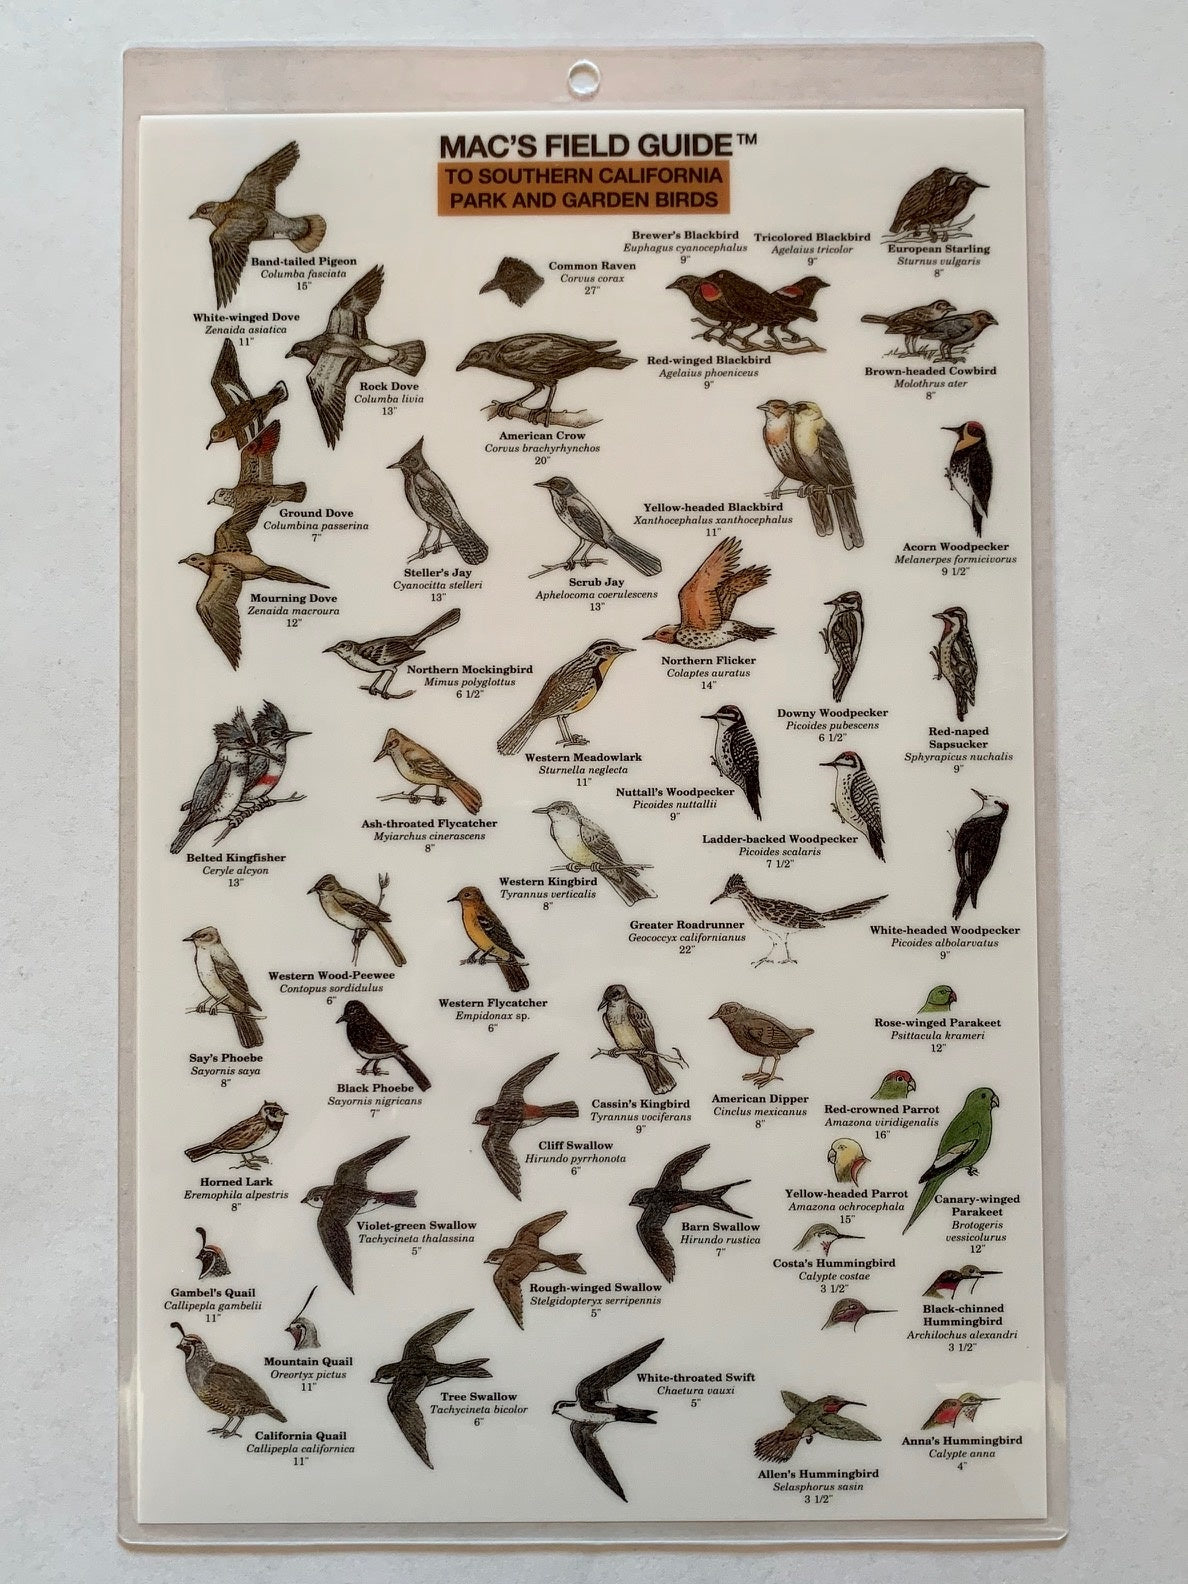 Mac's Field Guide - Southern California Park & Garden Birds